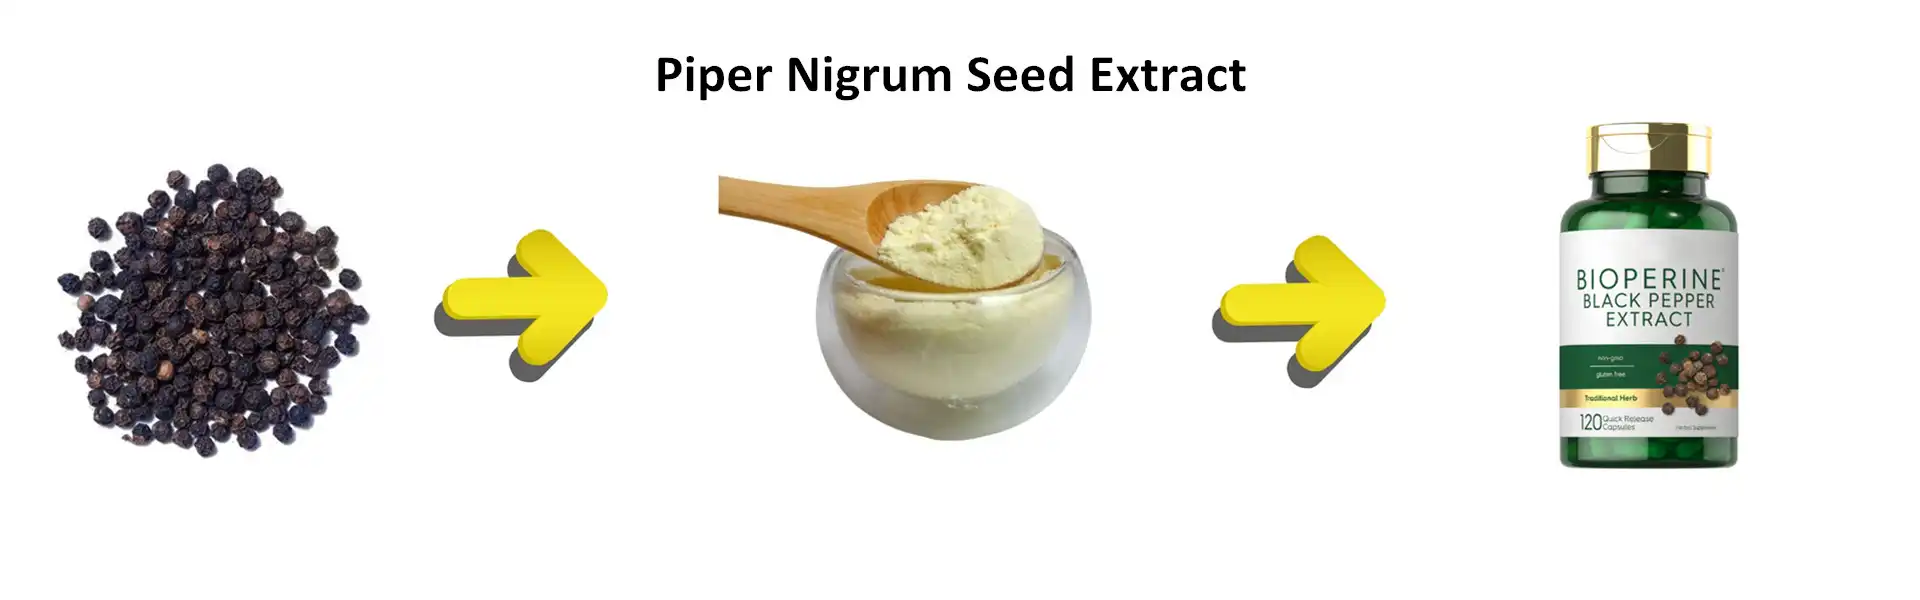 Piper nigrum seed extract